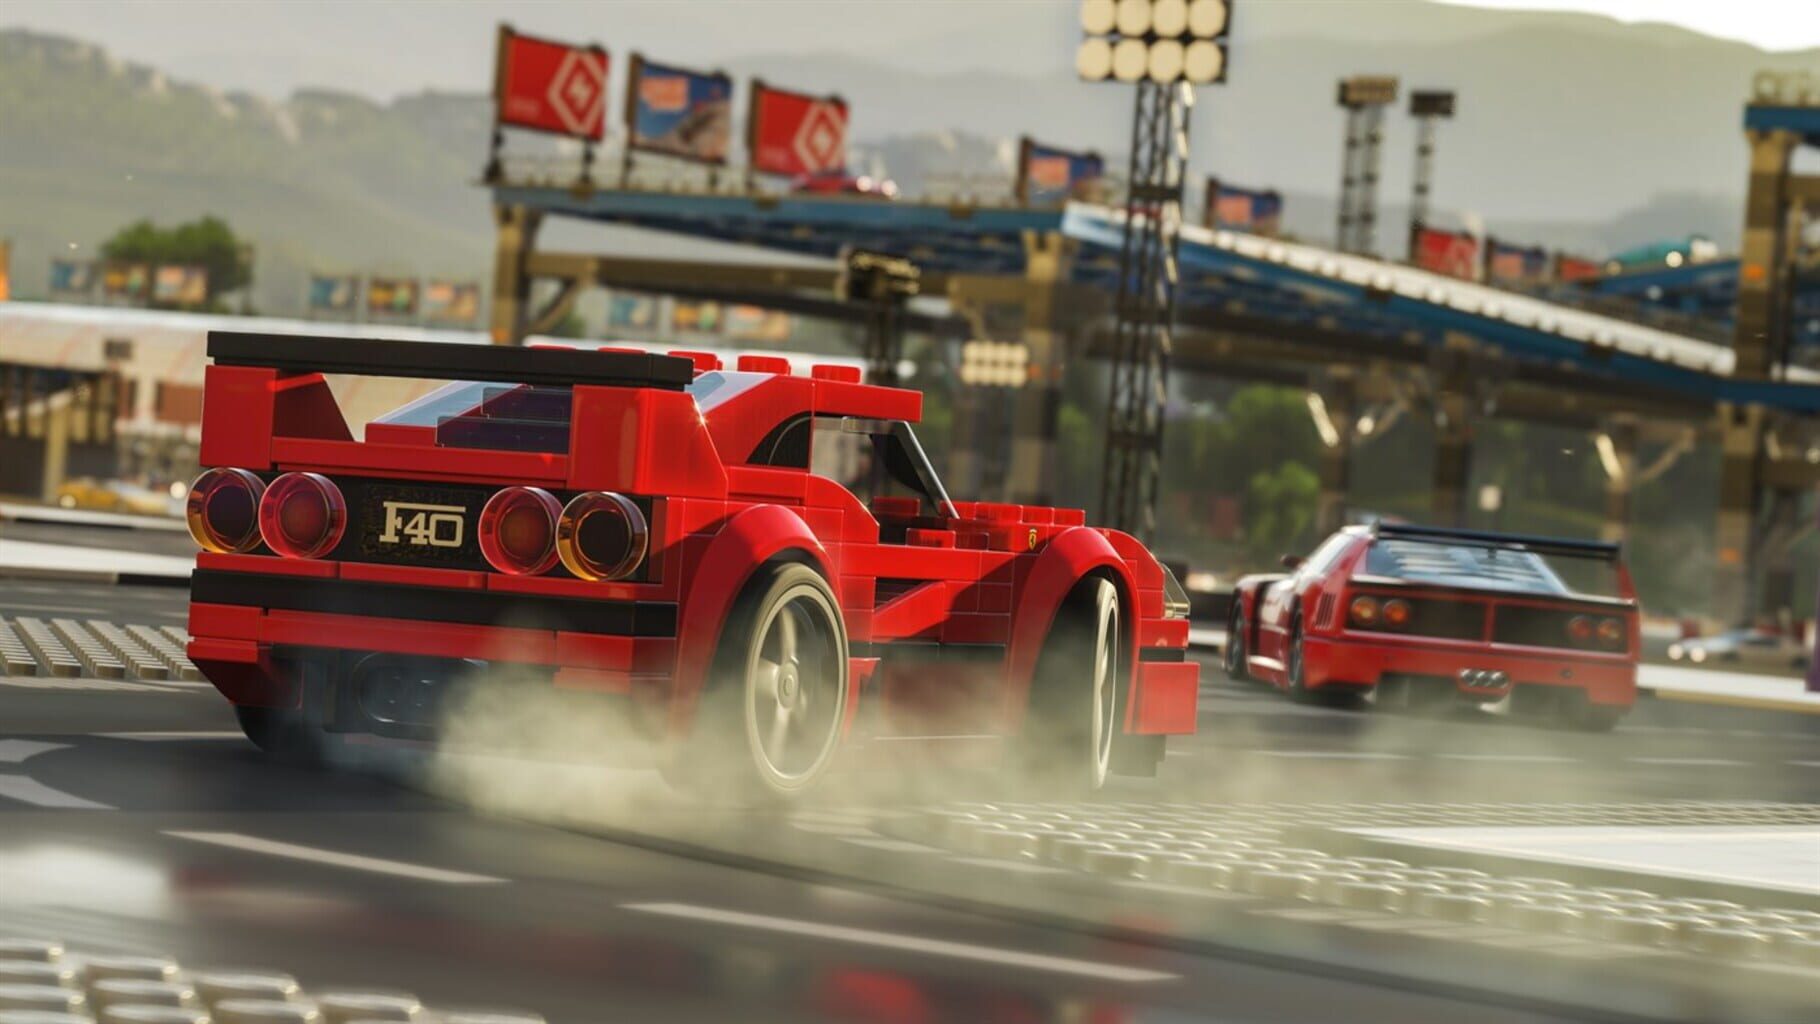 Forza Horizon 4: LEGO Speed Champions Image